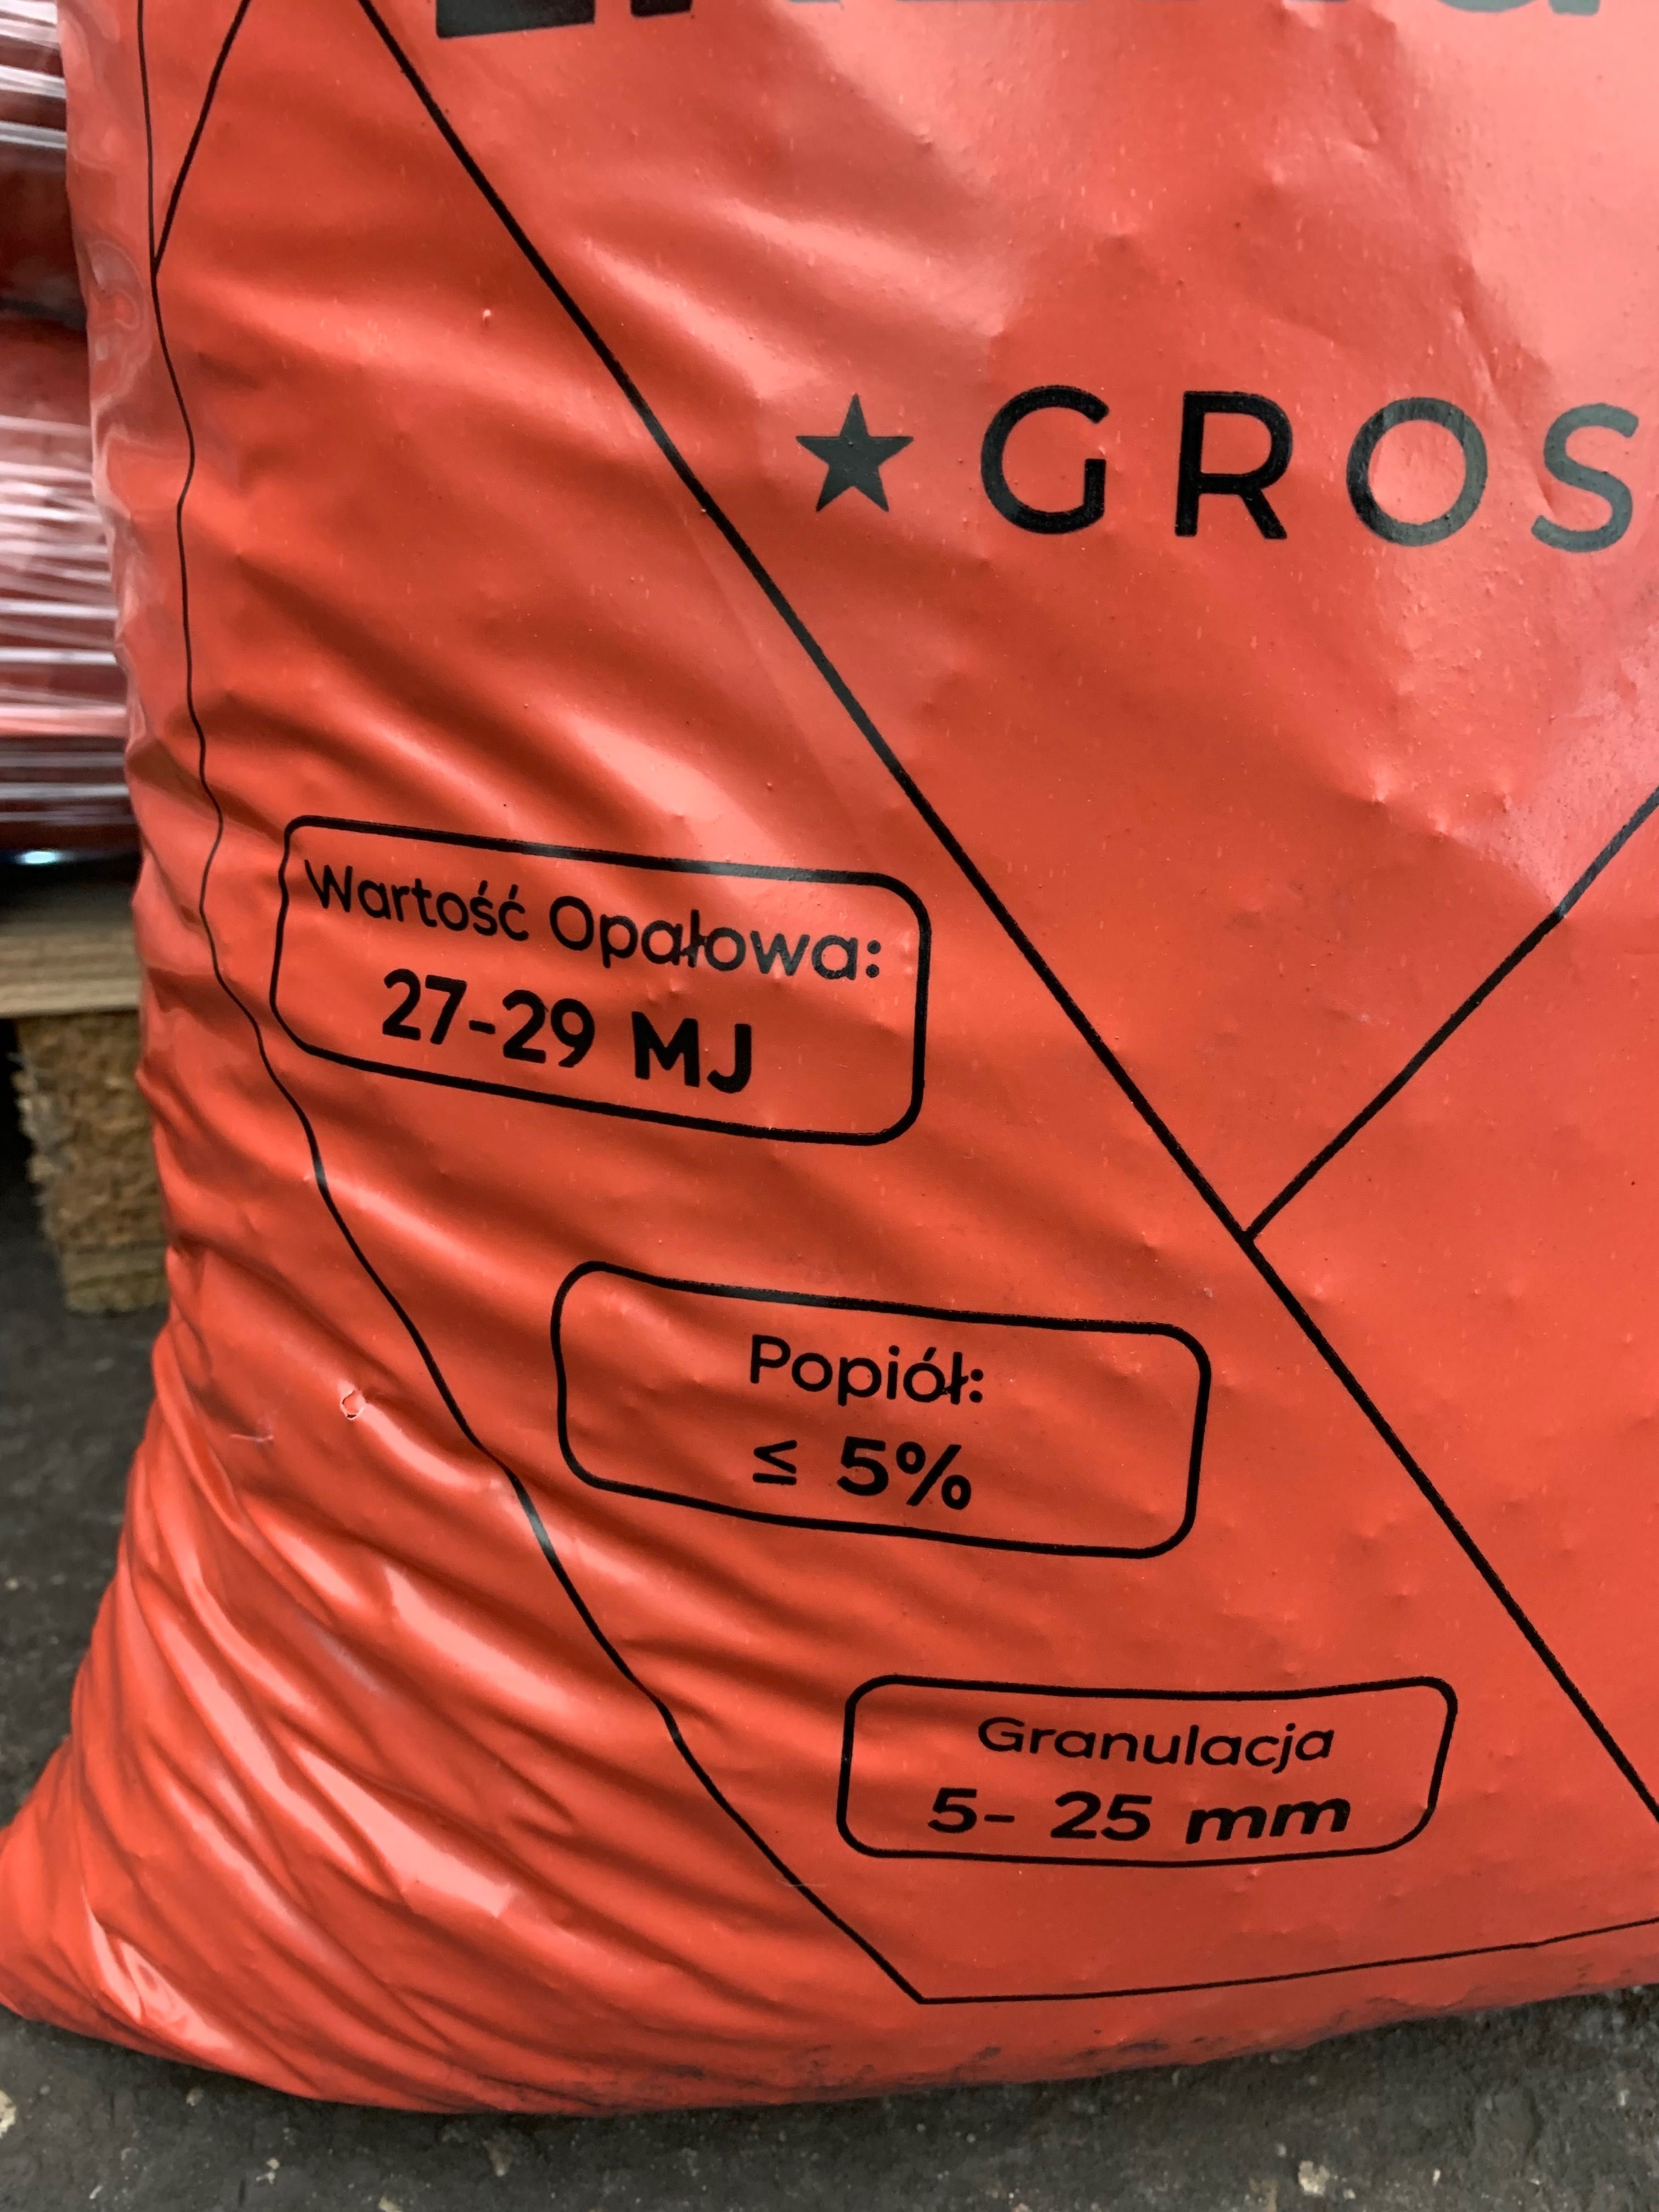 Ekogroszek Energy Premium Groszek Plus Skład Opału Stojadła